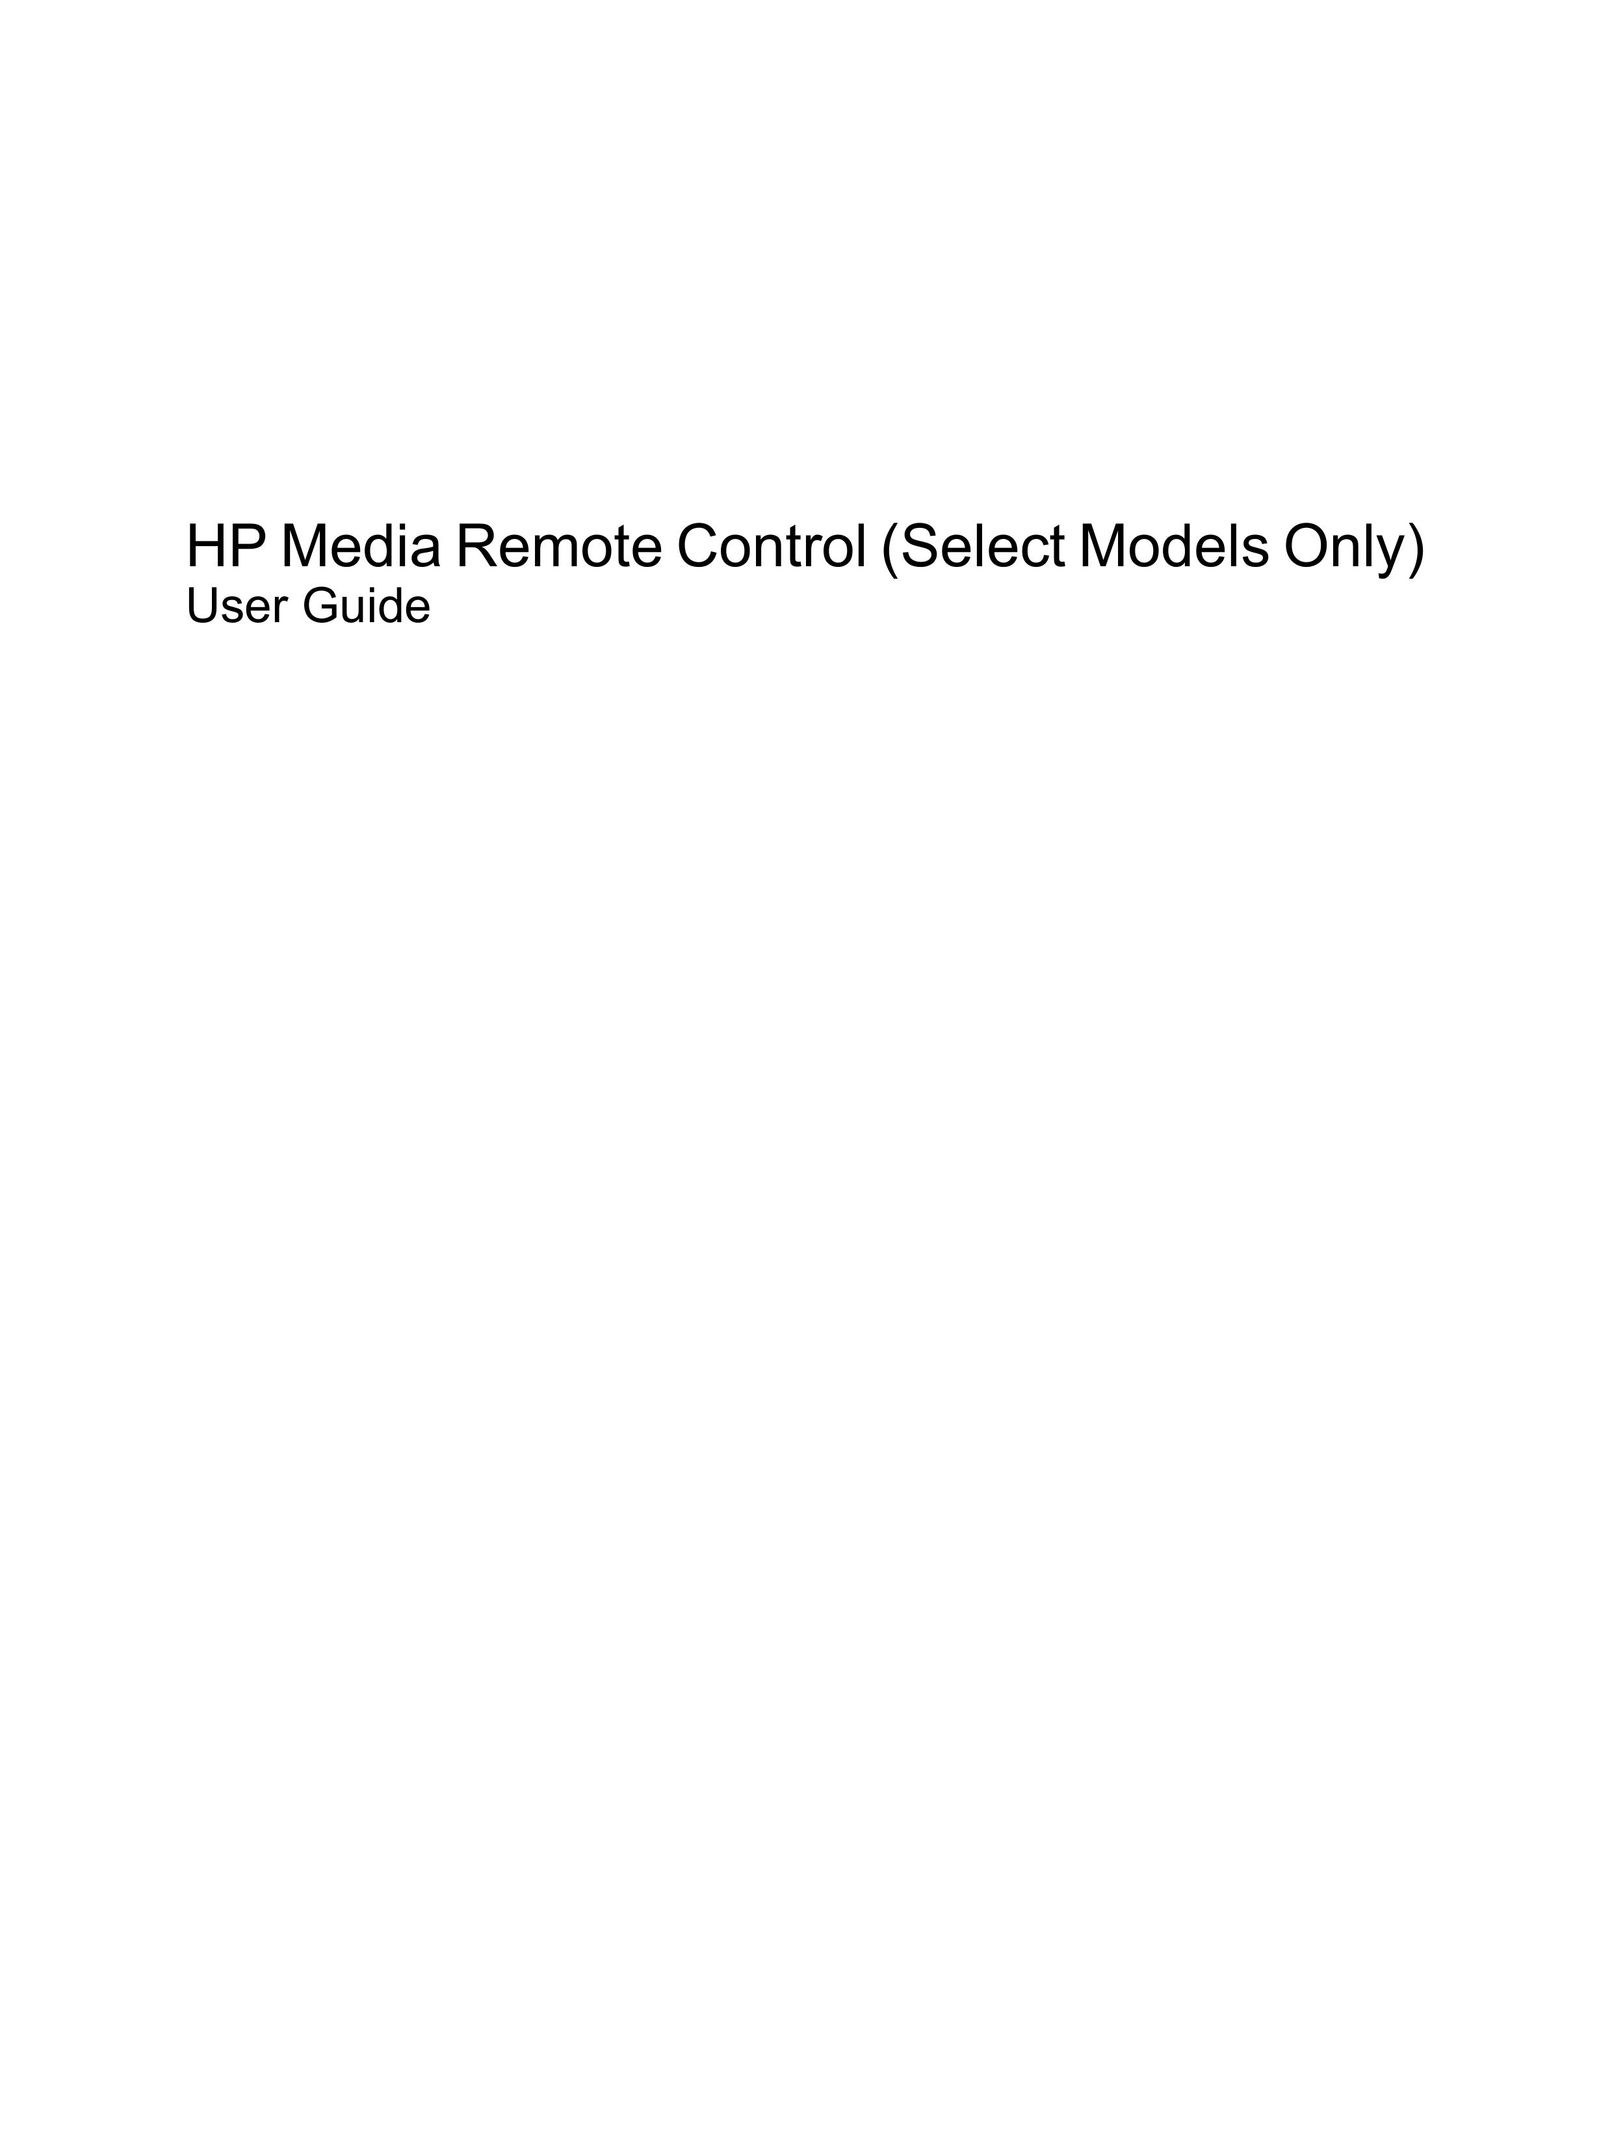 HP (Hewlett-Packard) Media Remote Control Universal Remote User Manual